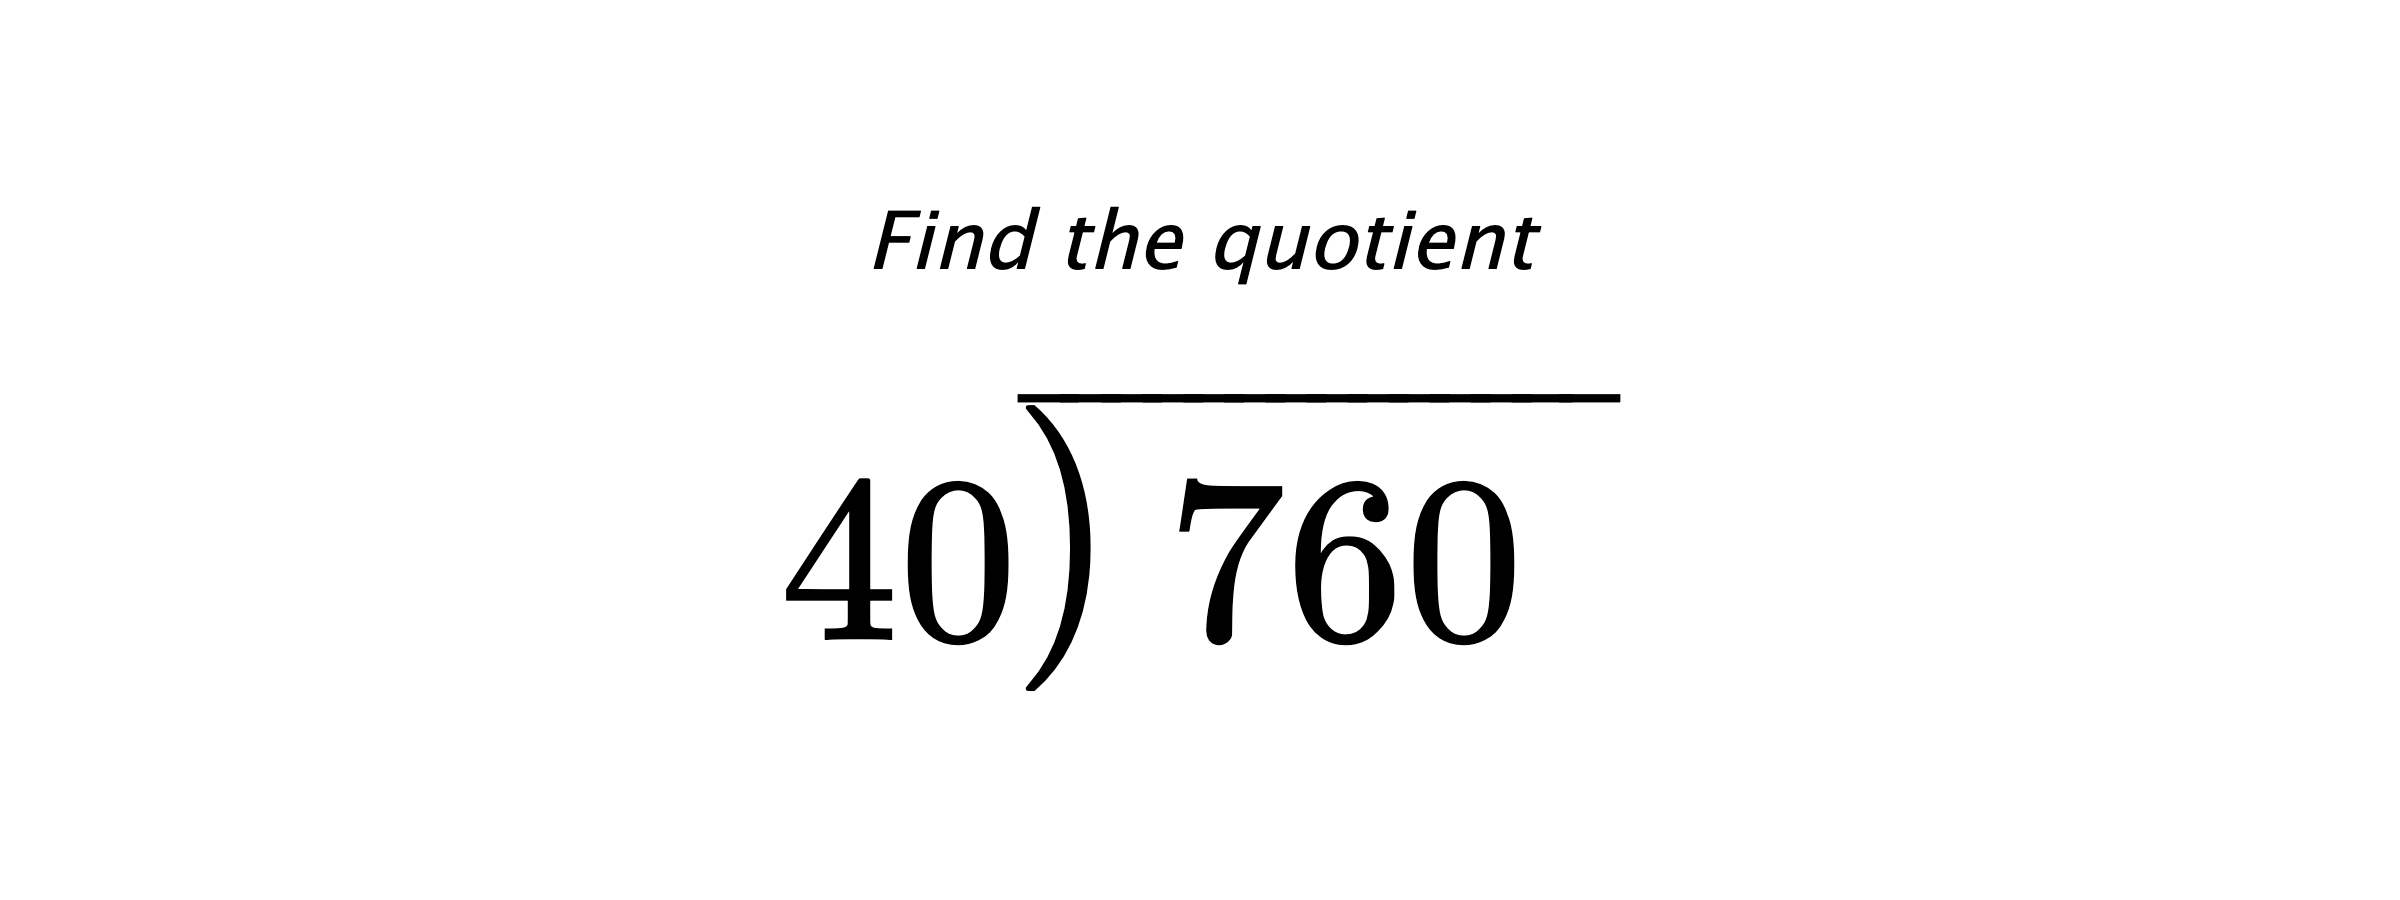 Find the quotient $ 40{\overline{\smash{\raise.3ex\hbox{$\big)$}}\,760\phantom{)}}} $